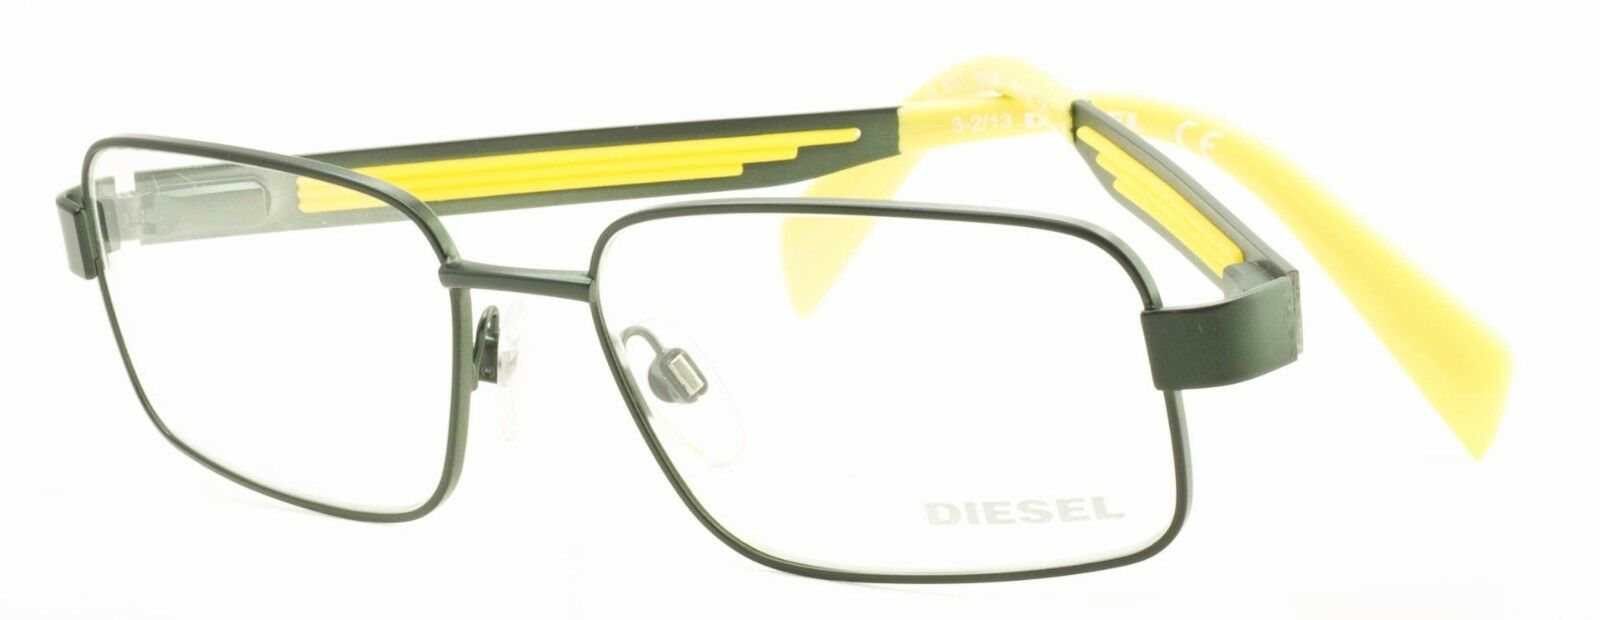 DIESEL DL 5051 col. 097 Eyewear FRAMES RX Optical Eyeglasses Glasses New - BNIB